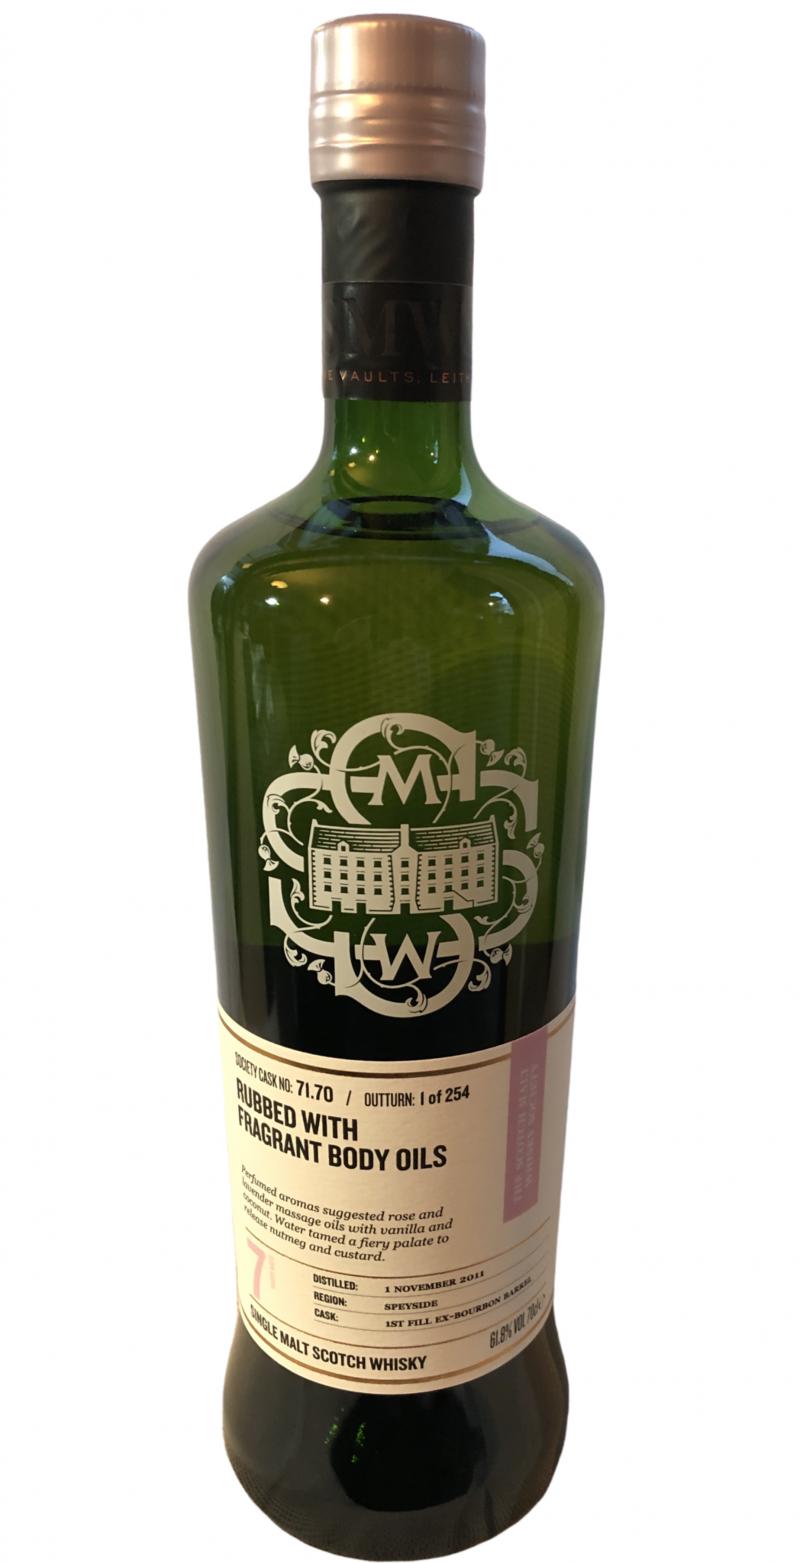 Glenburgie 2011 SMWS 71.70 Rubbed with fragrant body oils 1st Fill Ex-Bourbon Barrel 61.8% 700ml